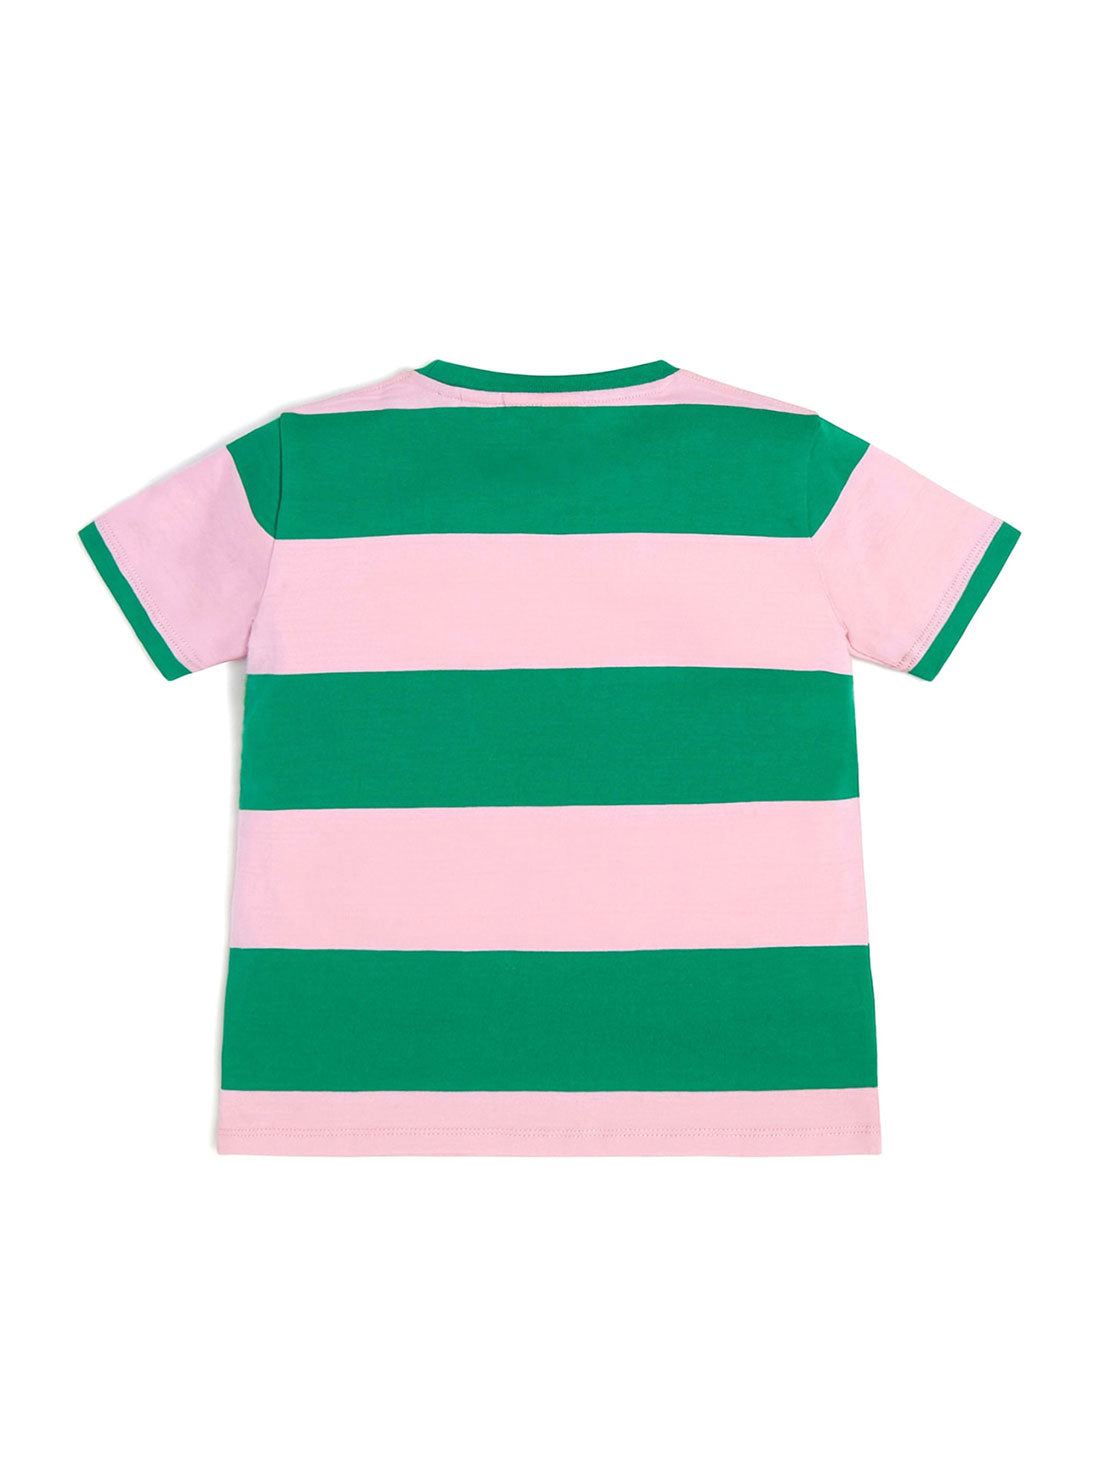 GUESS Boy Green Matcha Multi Striped T-Shirt (4-14) L2YI54K9XF1 Back View